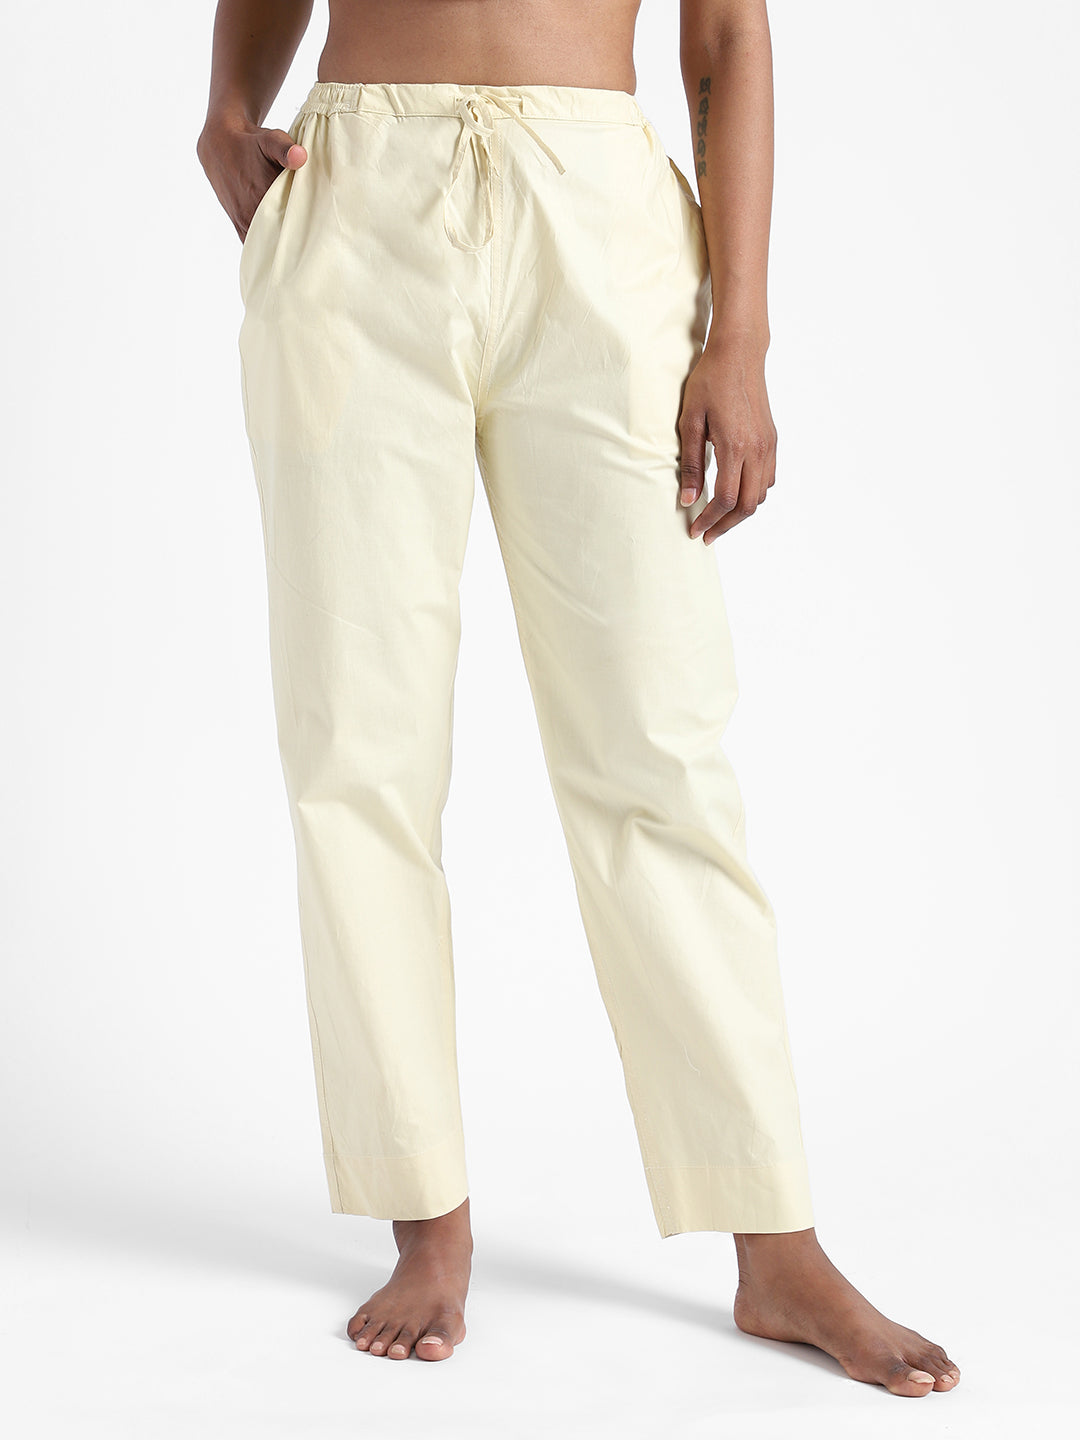 Lemon Yellow Women's Organic Cotton & Natural Dyed Slim Fit Pants